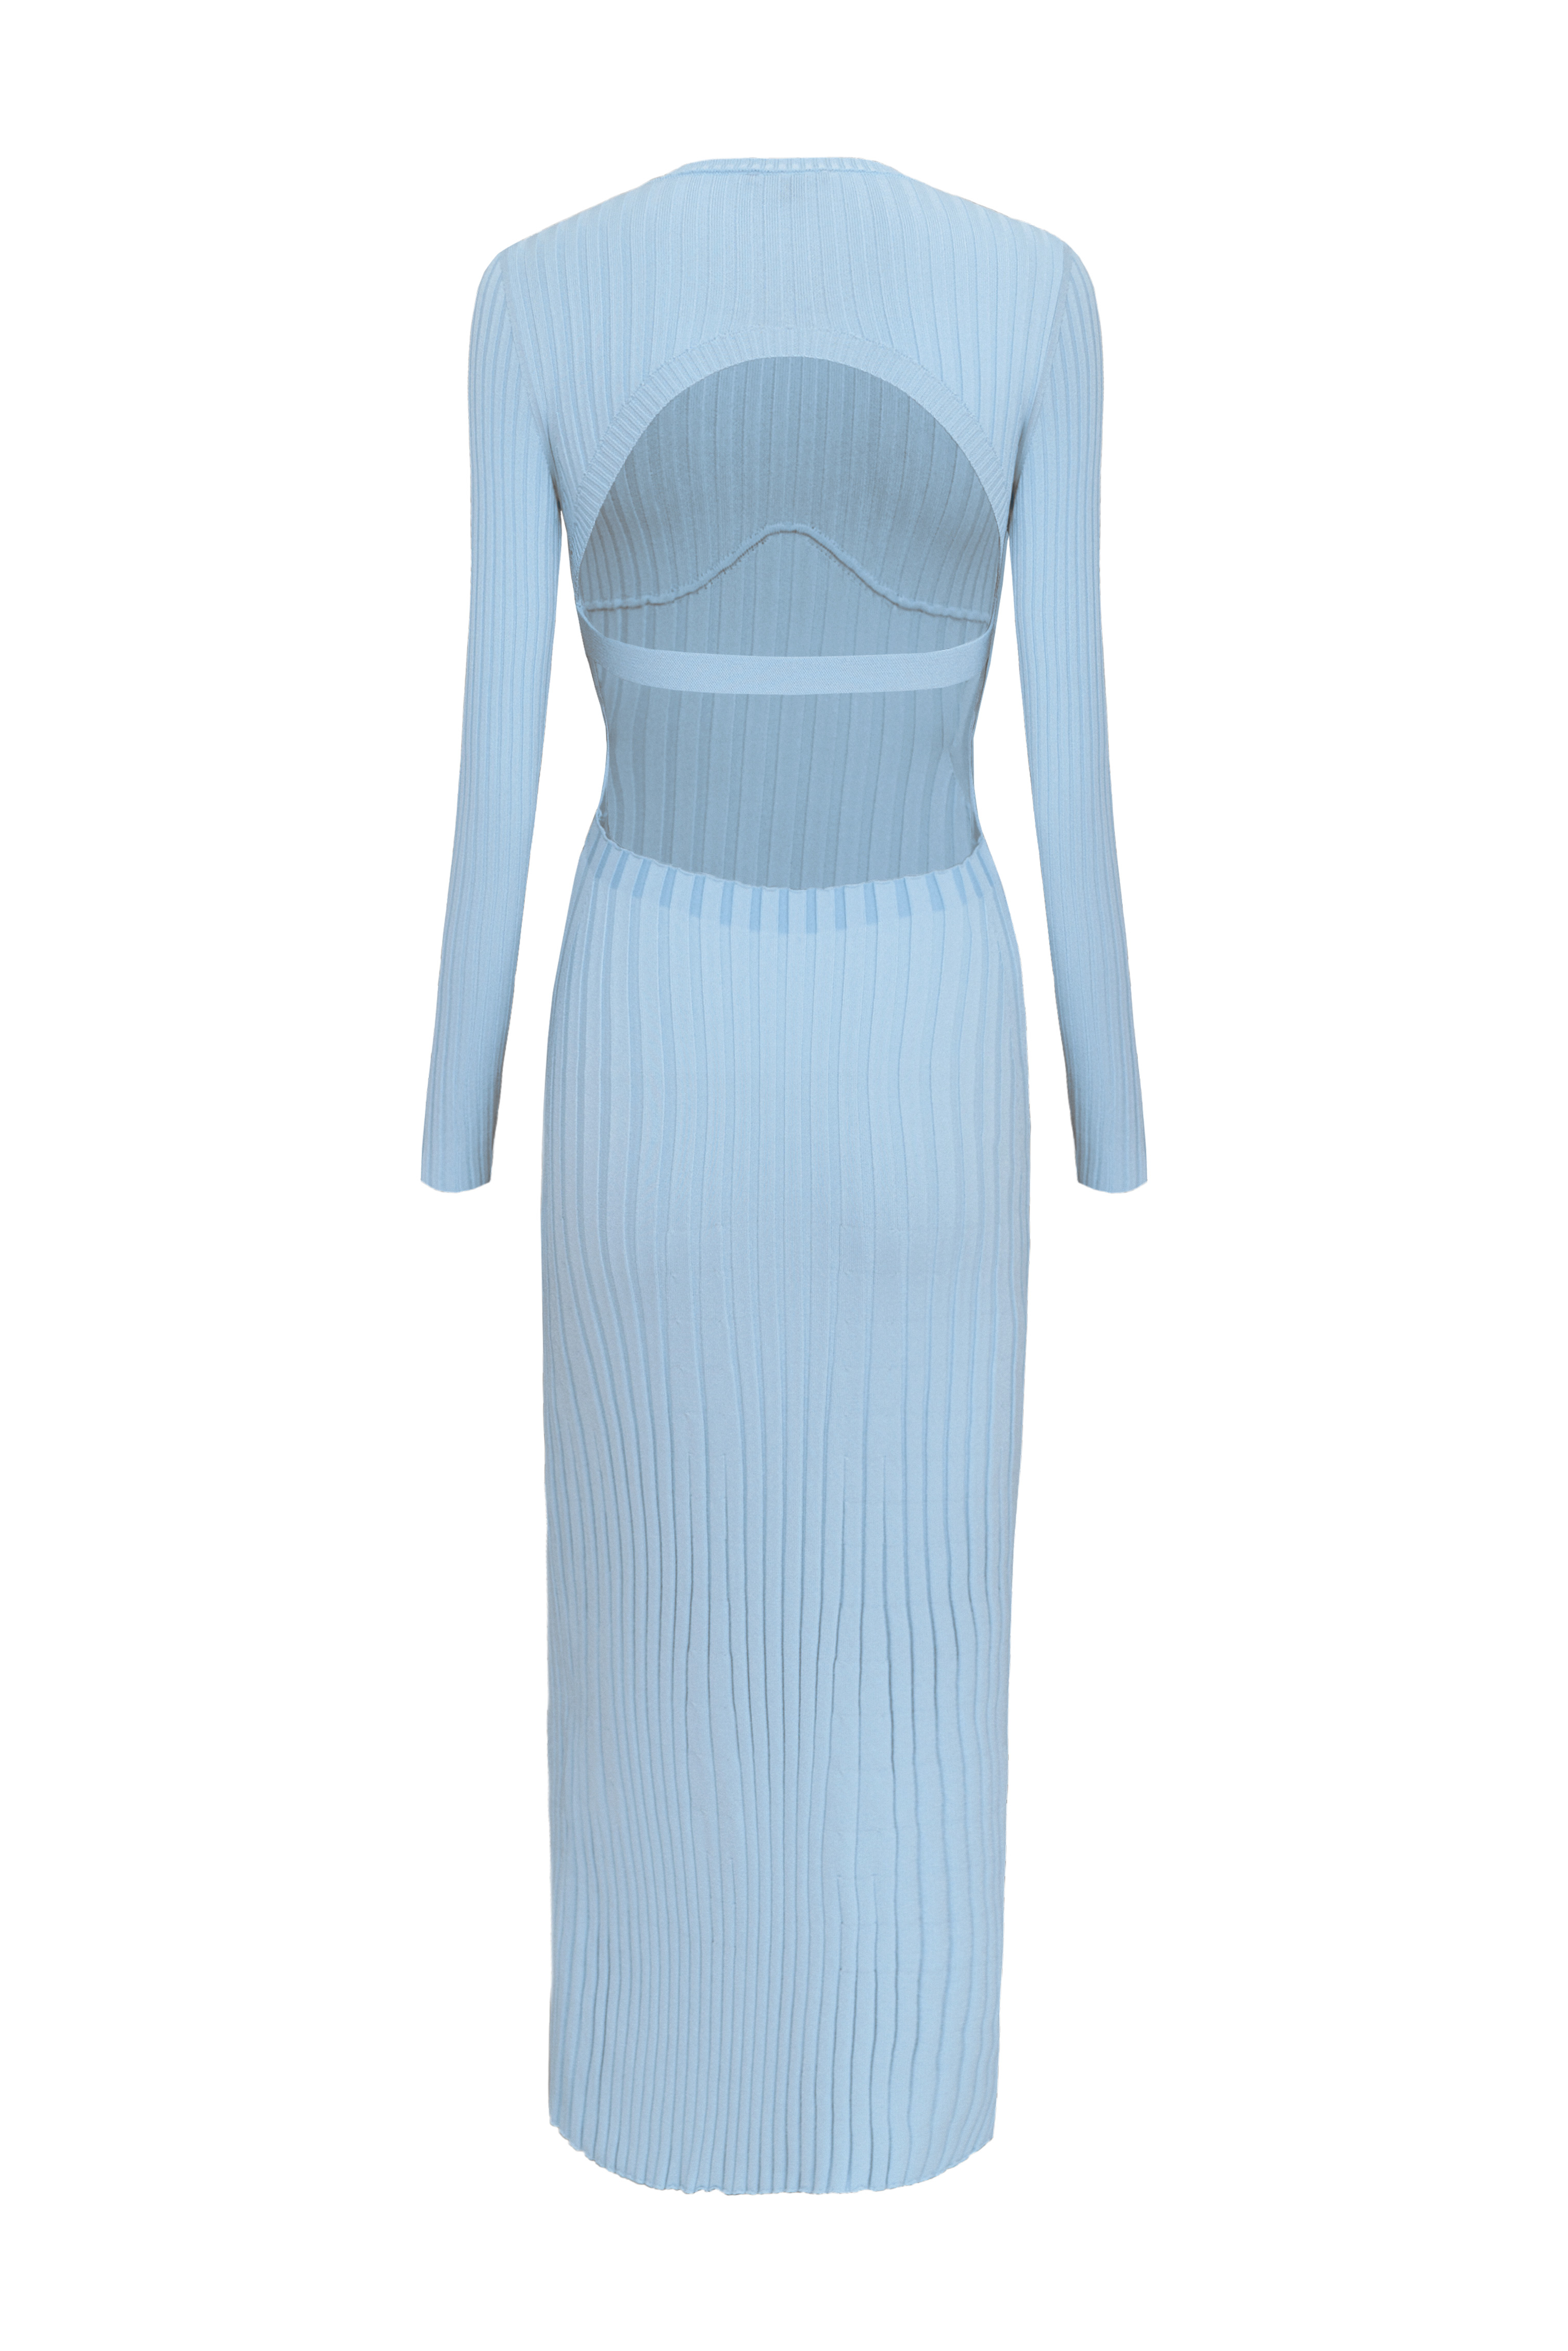 Dress 3223-24 Light blue from BRUSNiKA